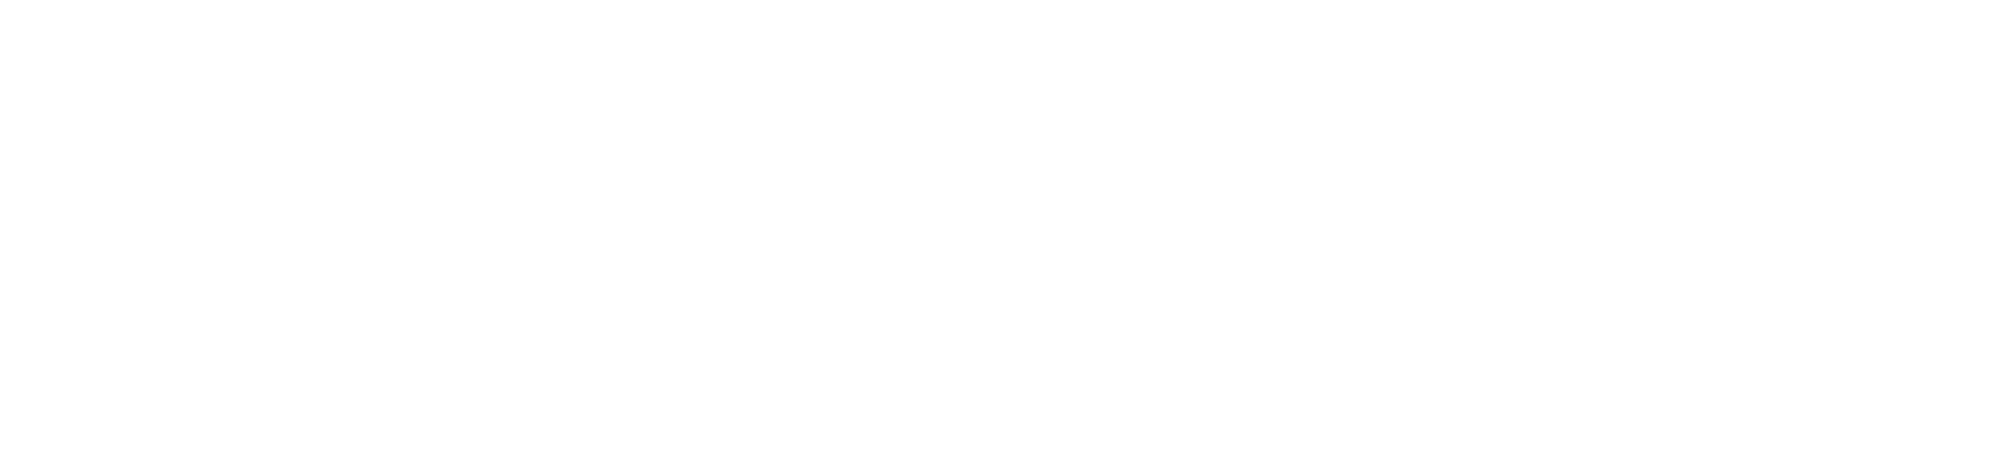 Oakbend Medical Center Logo